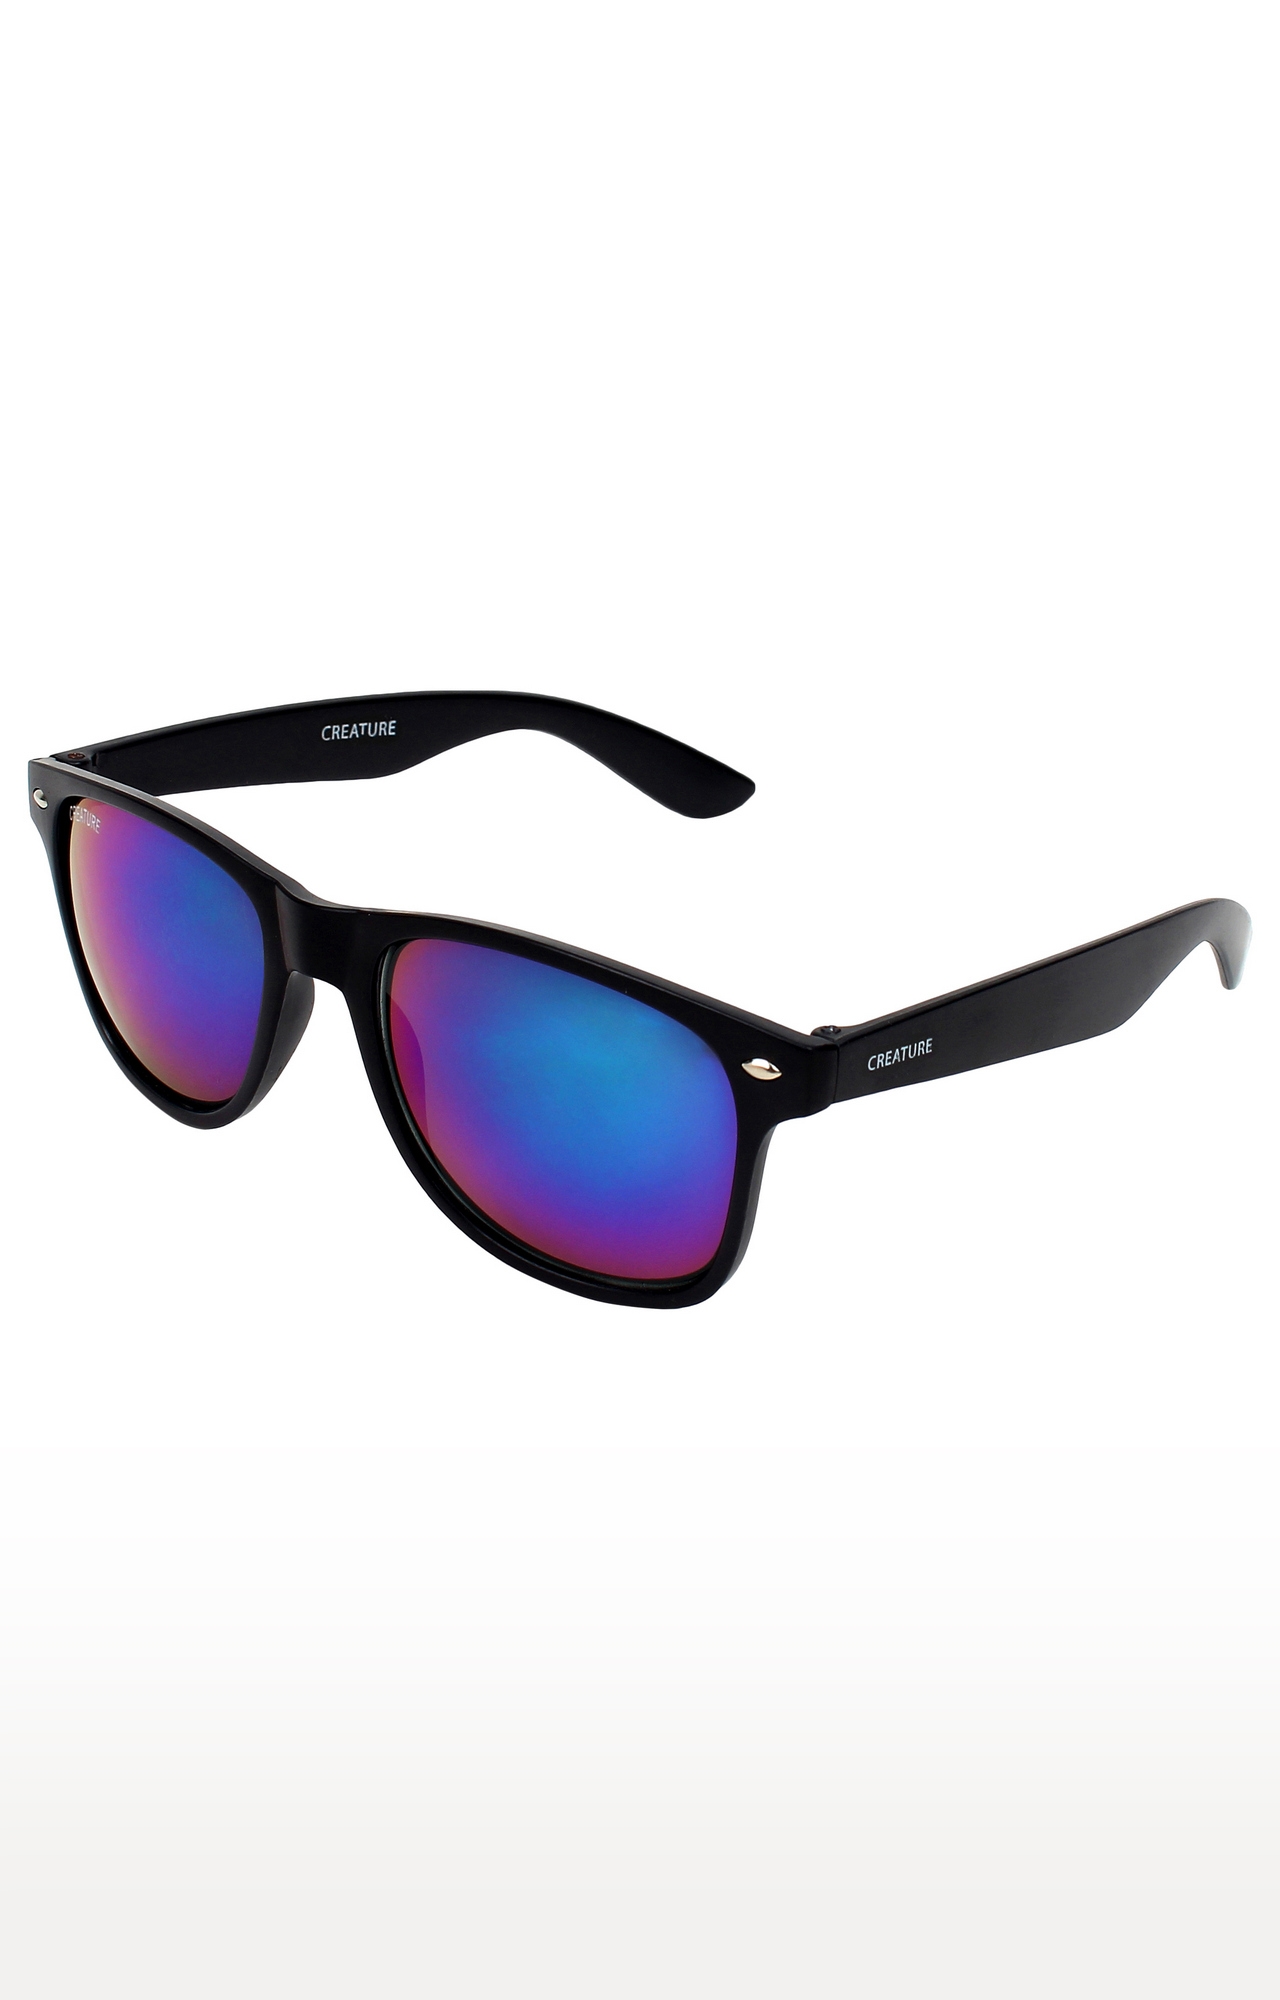 CREATURE | CREATURE Black Matte Finish UV Protected Unisex Sunglasses (Lens-Blue|Frame-Black) 1